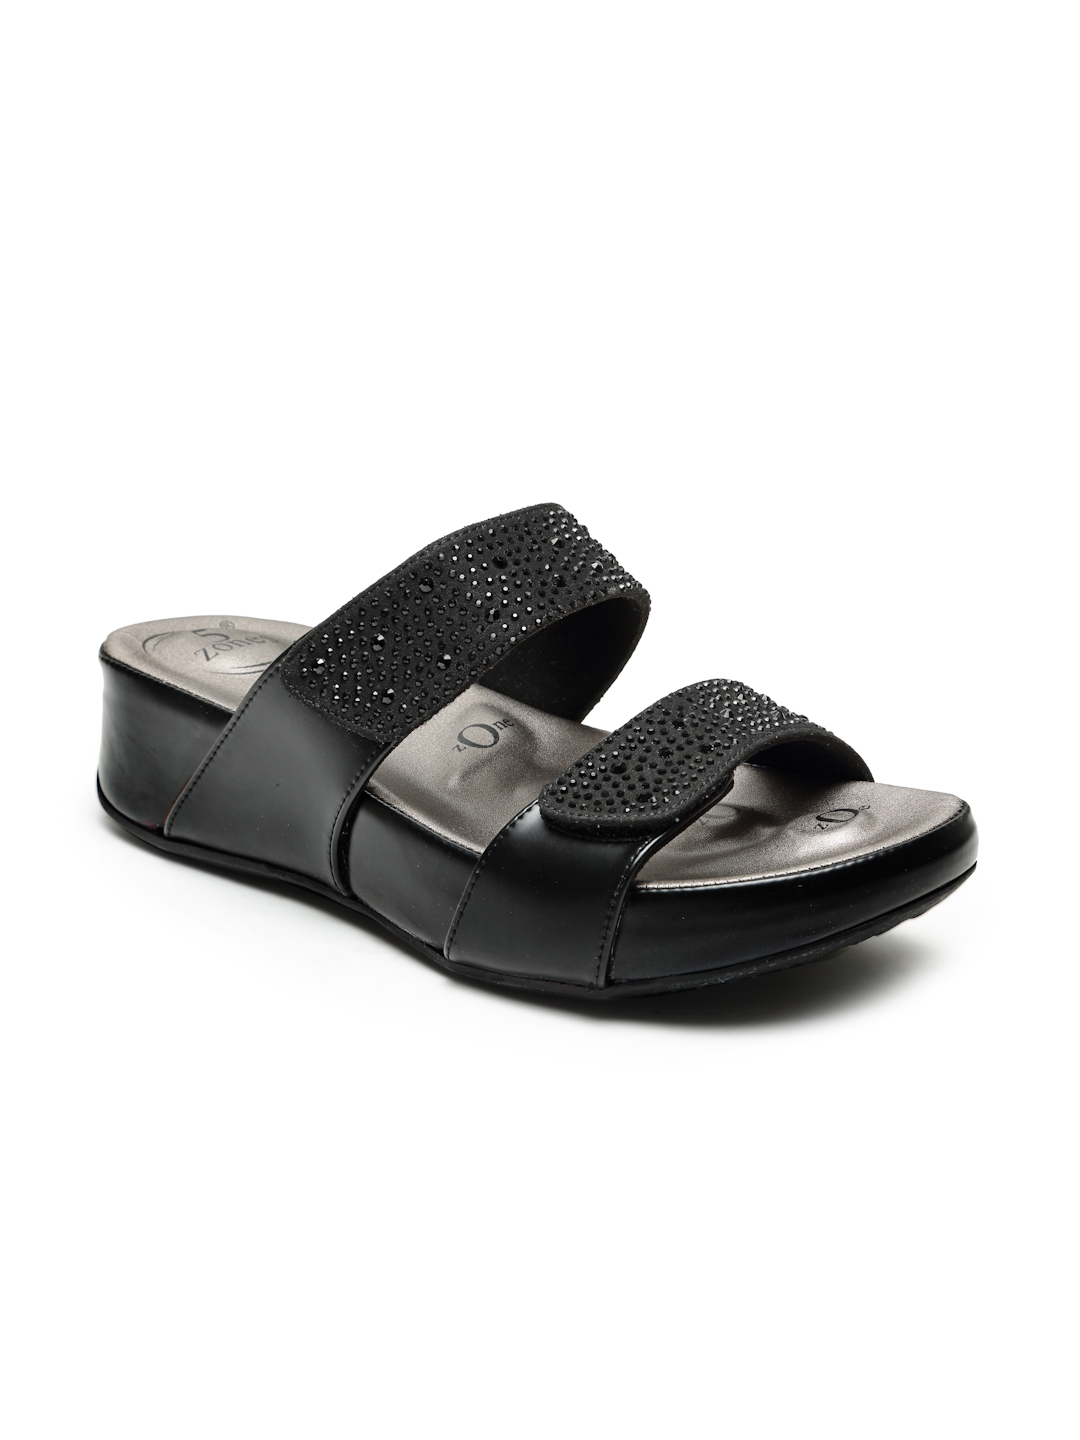 Buy Von Wellx Germany Comfort Women's Black Casual Sandals Paula Online in Kuwait City